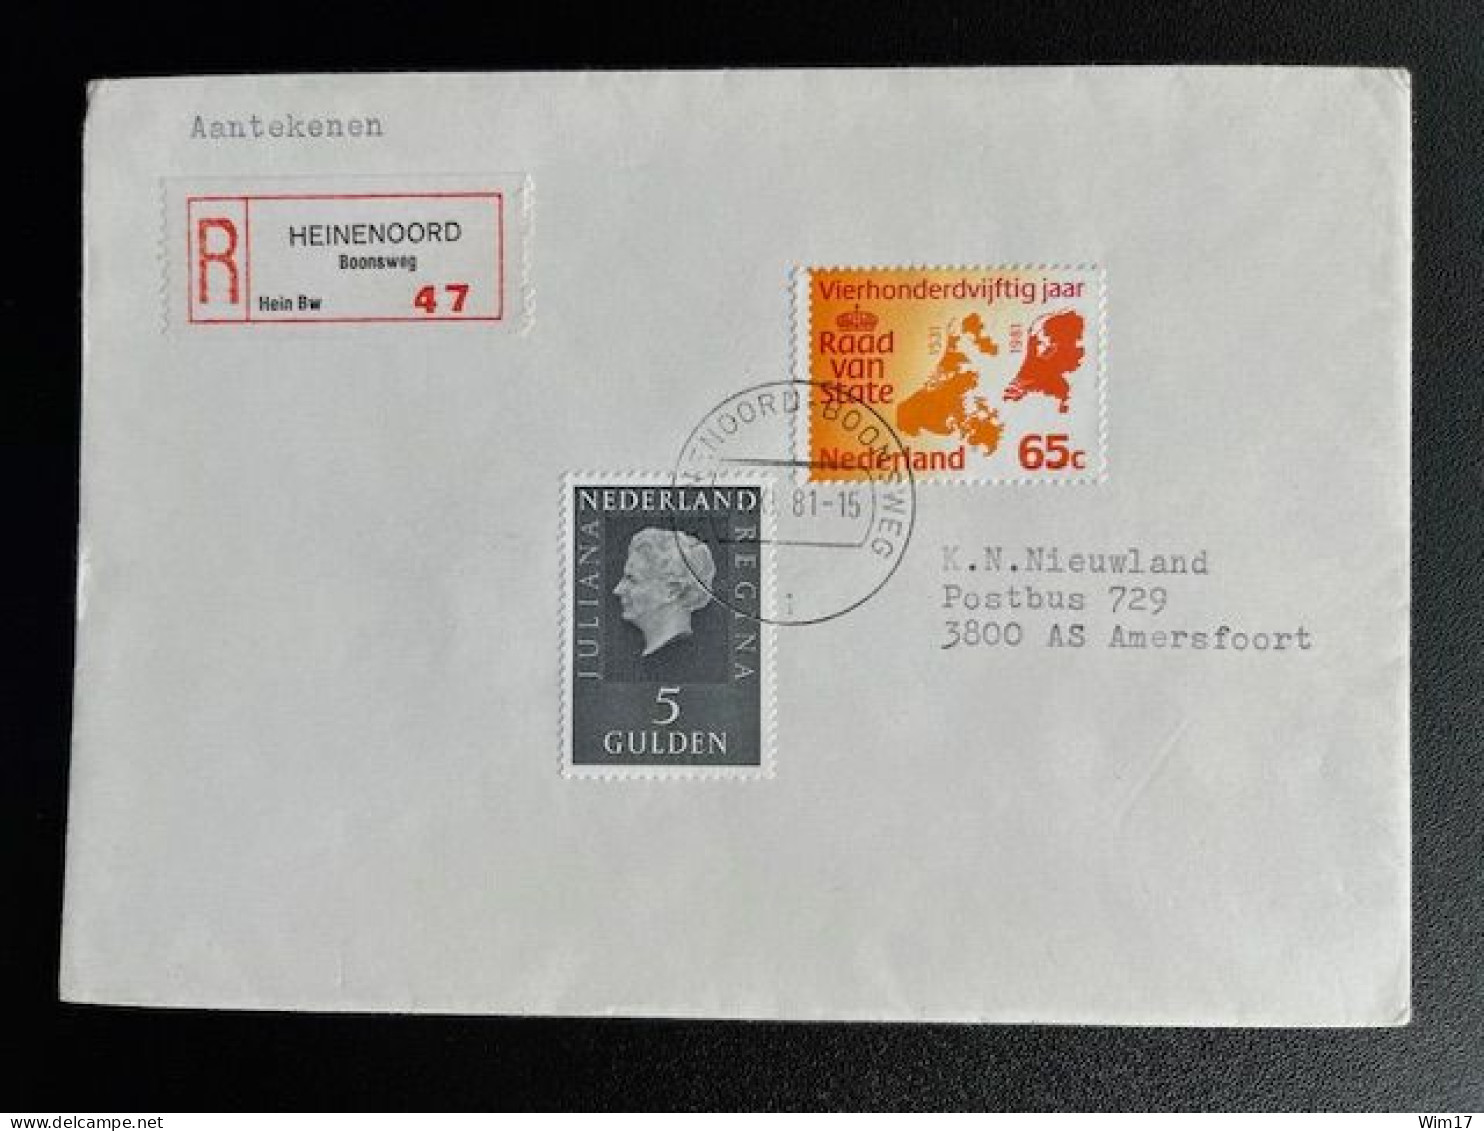 NETHERLANDS 1981 REGISTERED LETTER HEINENOORD BOONSWEG TO AMERSFOORT 19-11-1981 NEDERLAND AANGETEKEND - Covers & Documents